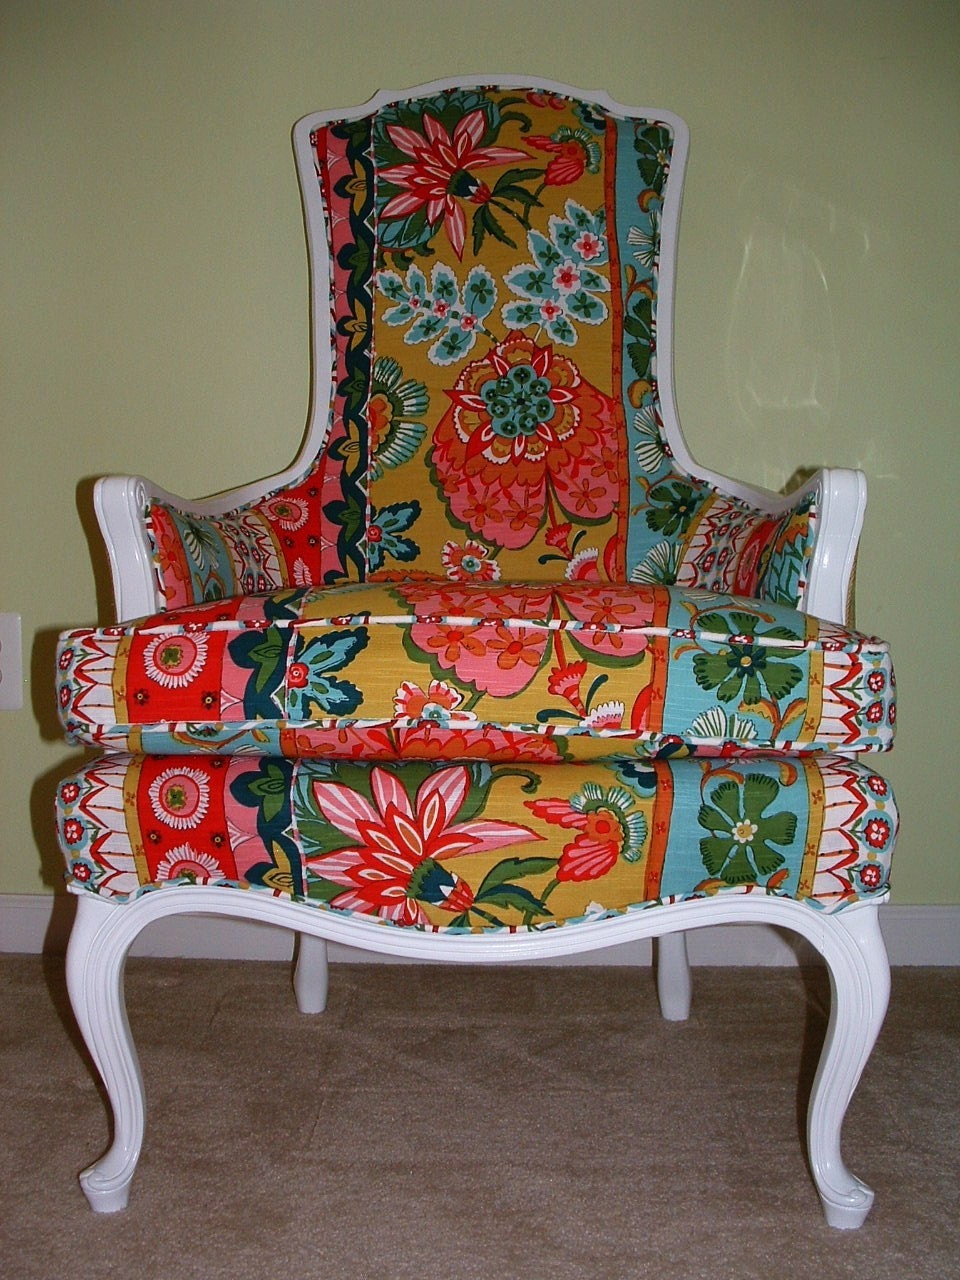 Vibrant Vintage Chair